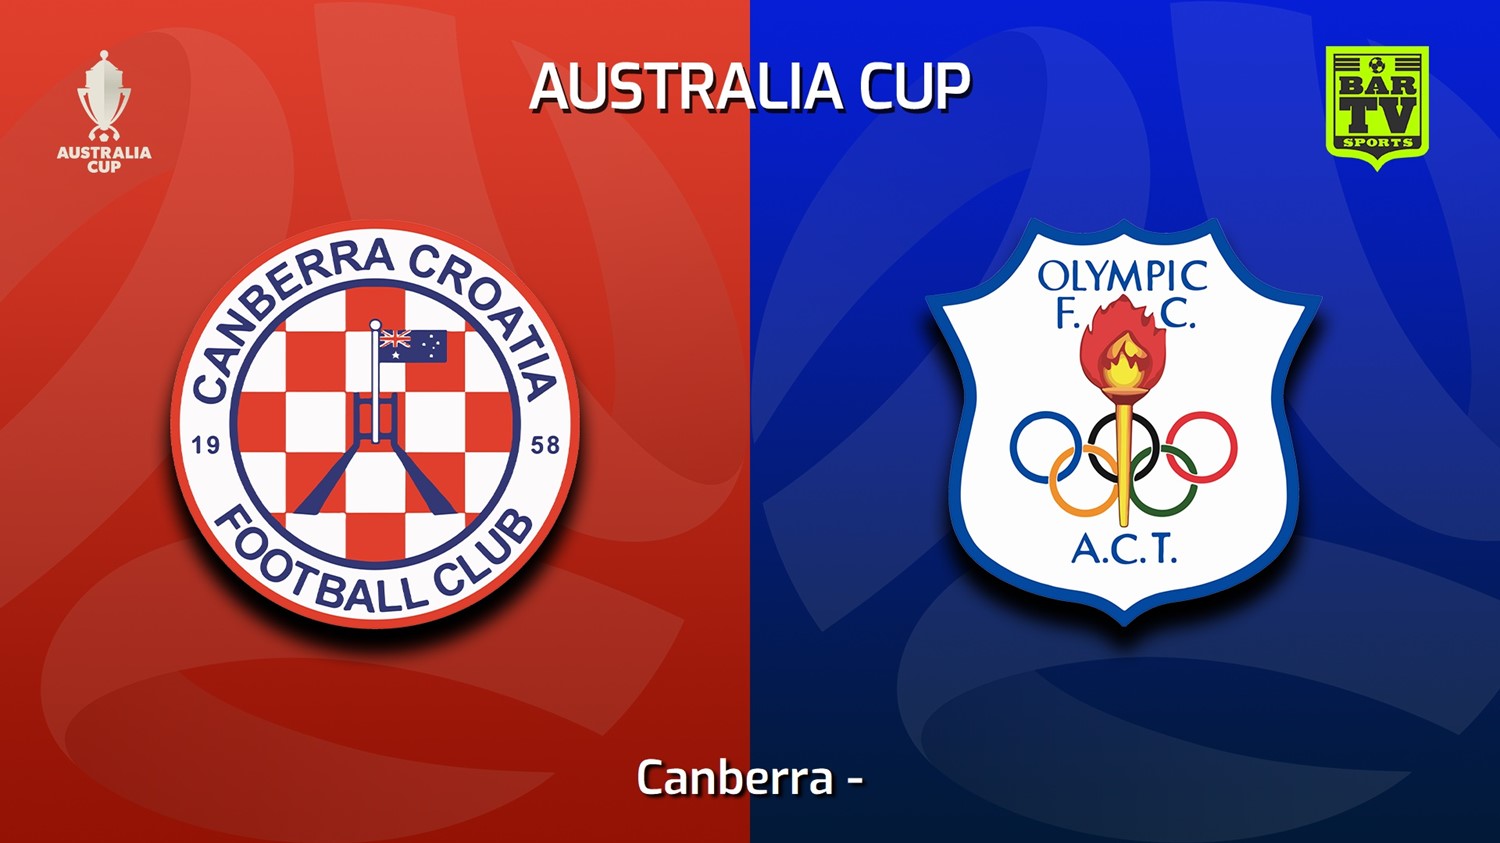 230603-Australia Cup Qualifying Canberra Croatia FC v Canberra Olympic FC Minigame Slate Image